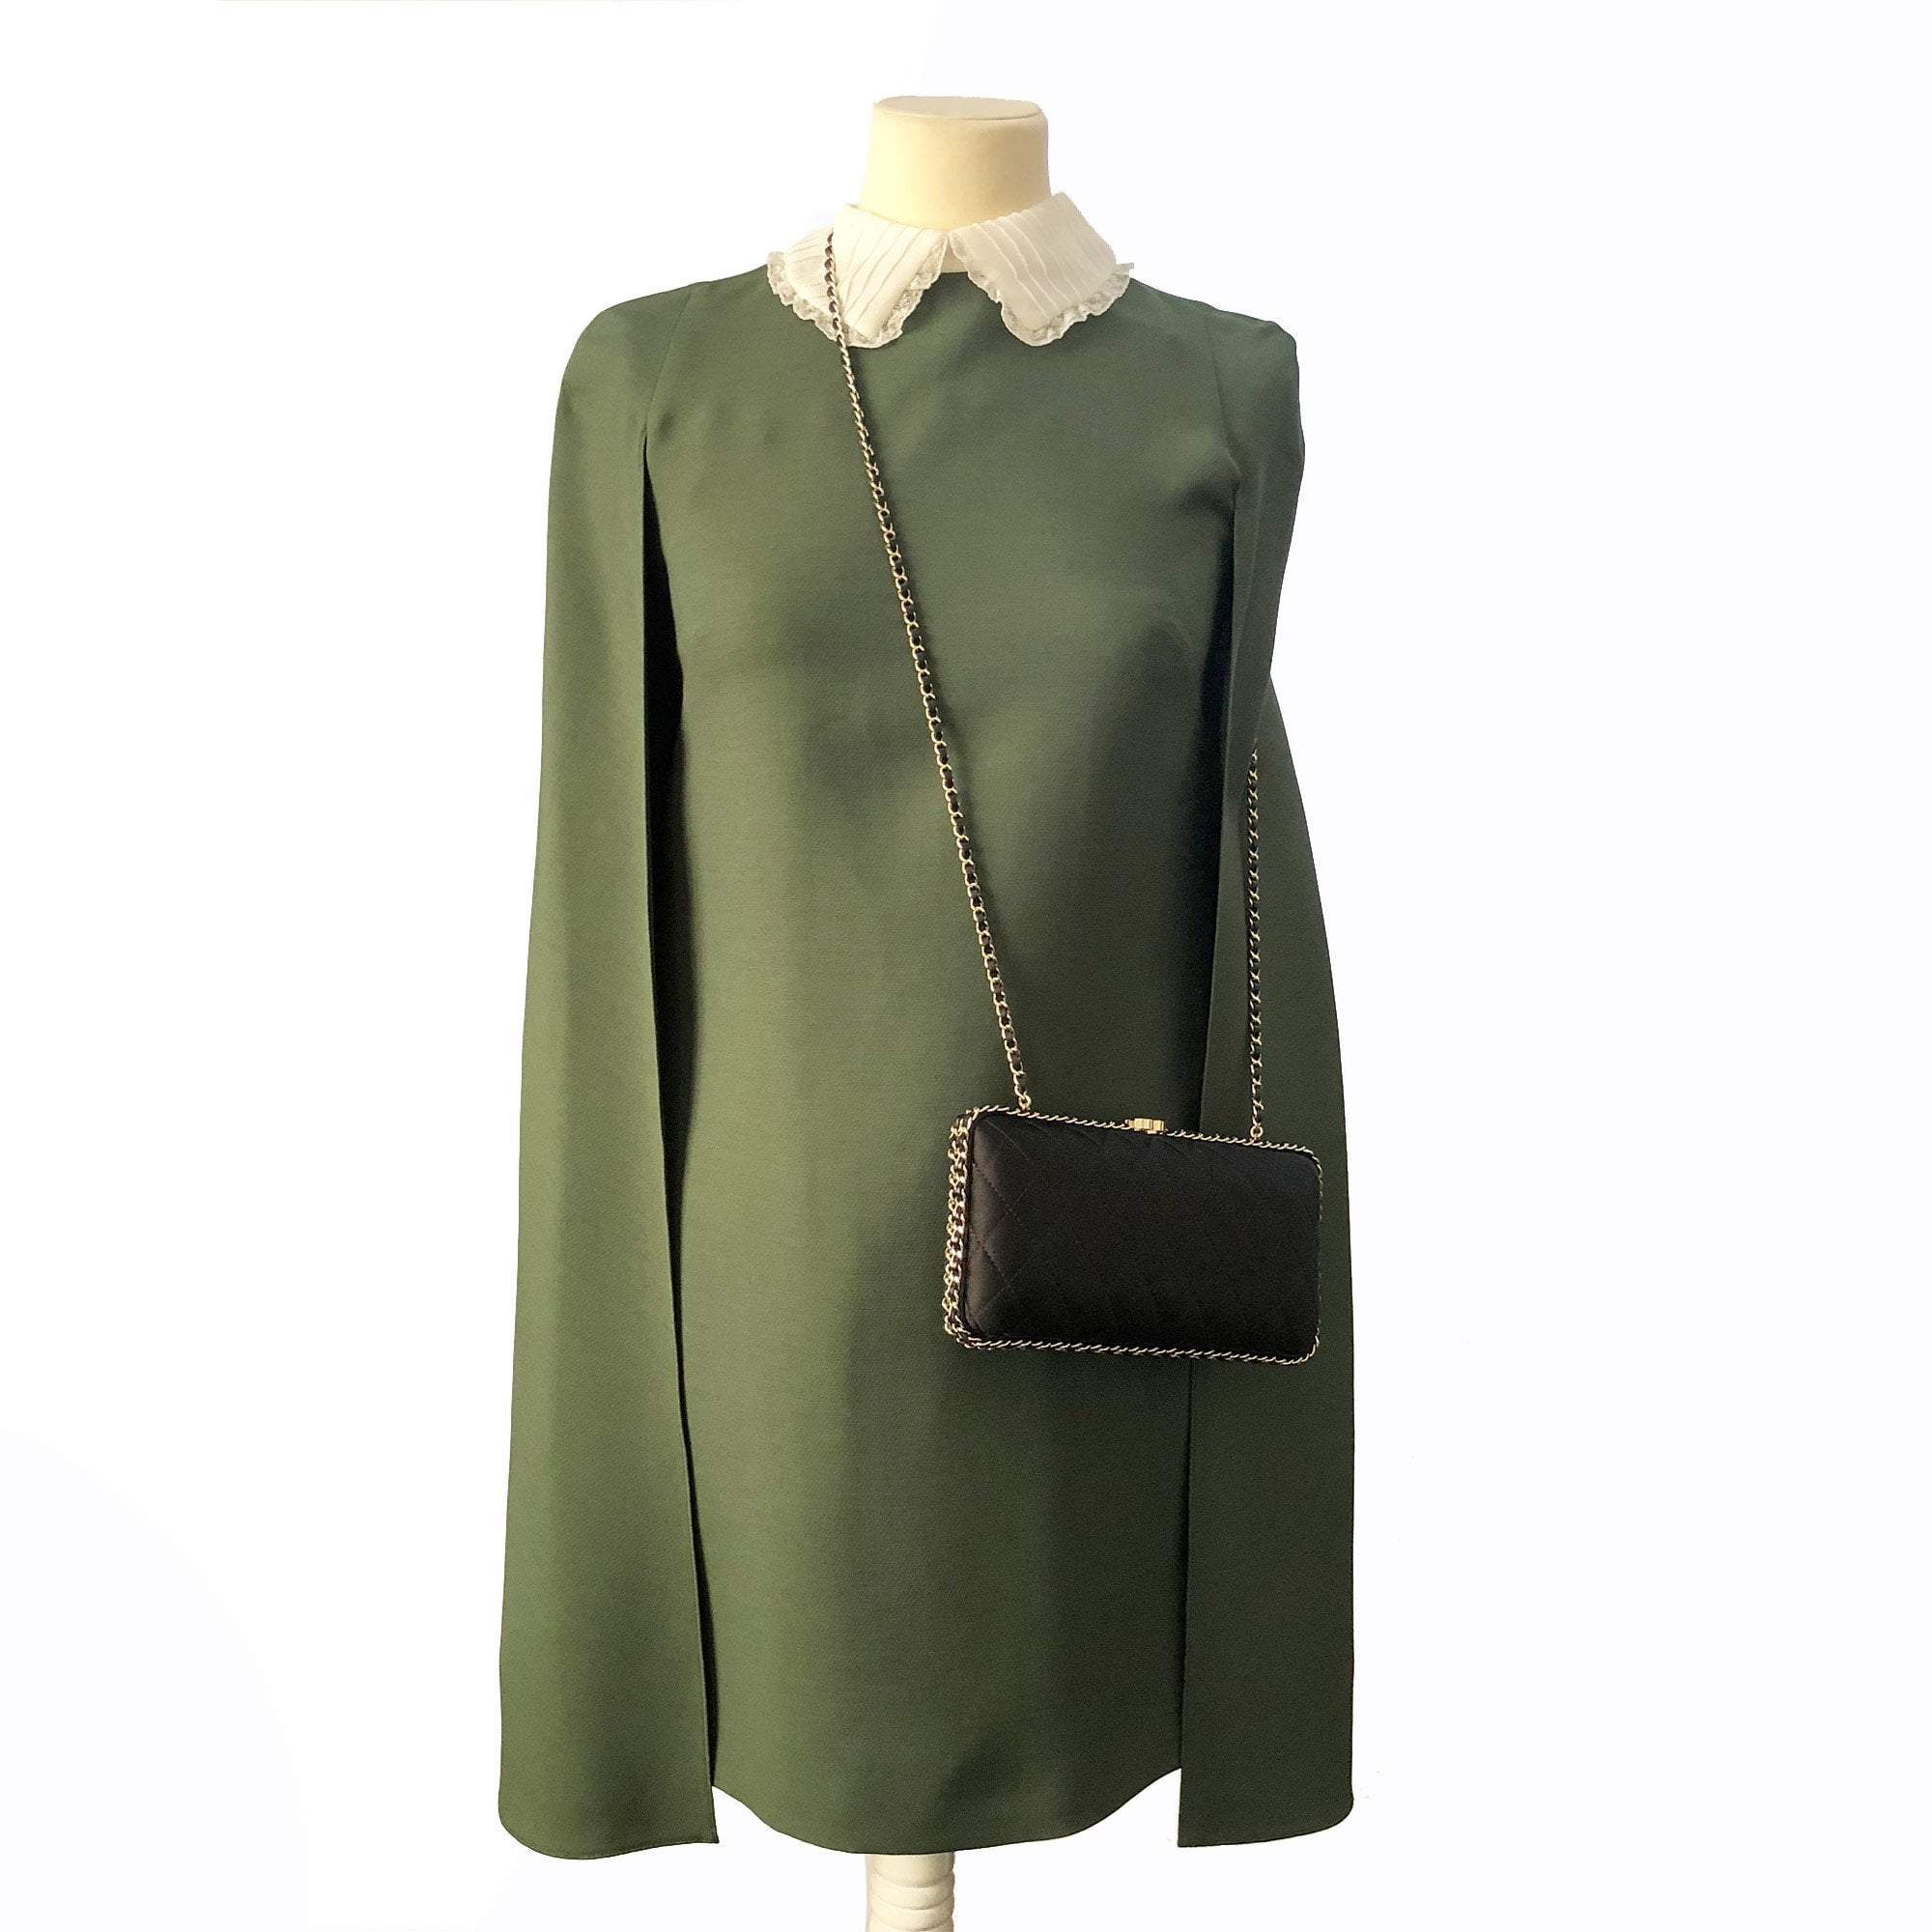 Chanel Black Quilted Satin Chain Box Clutch Bag – Garderobe